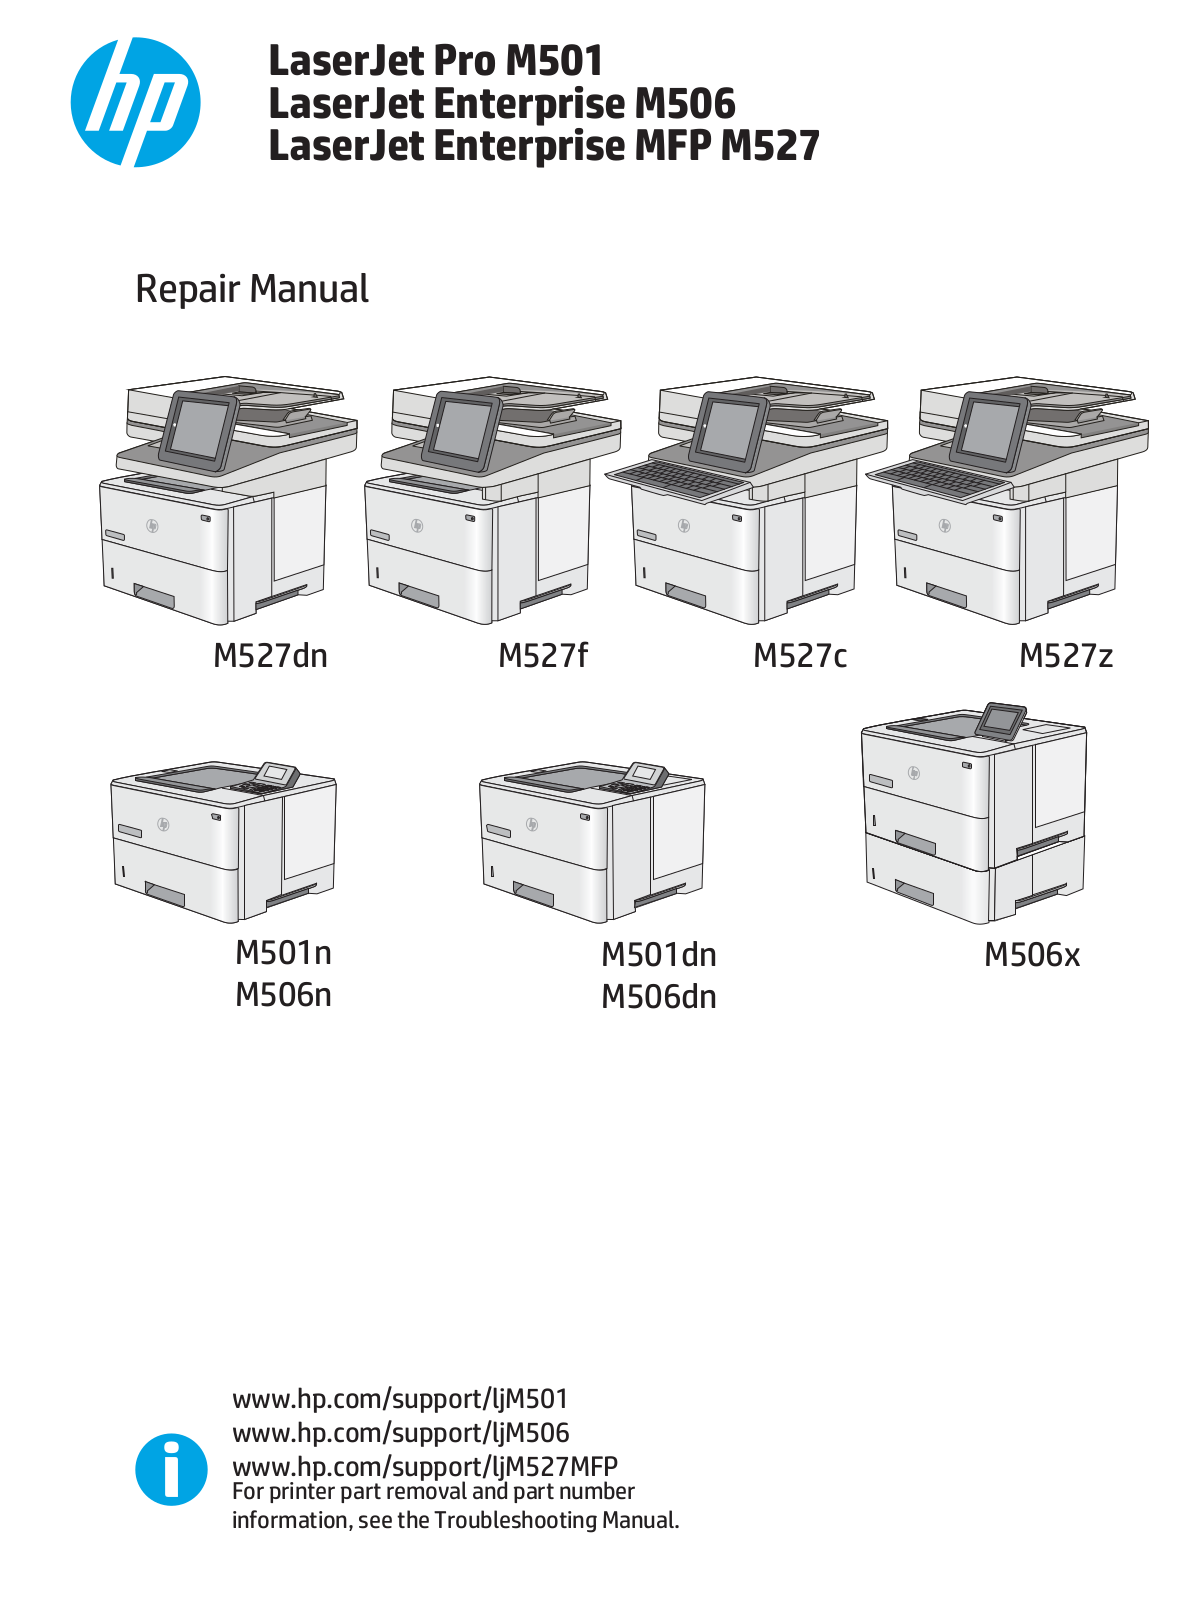 HP LaserJet Enterprise M506, LaserJet Pro M501, LaserJet Enterprise MFP M527 Repair Manual